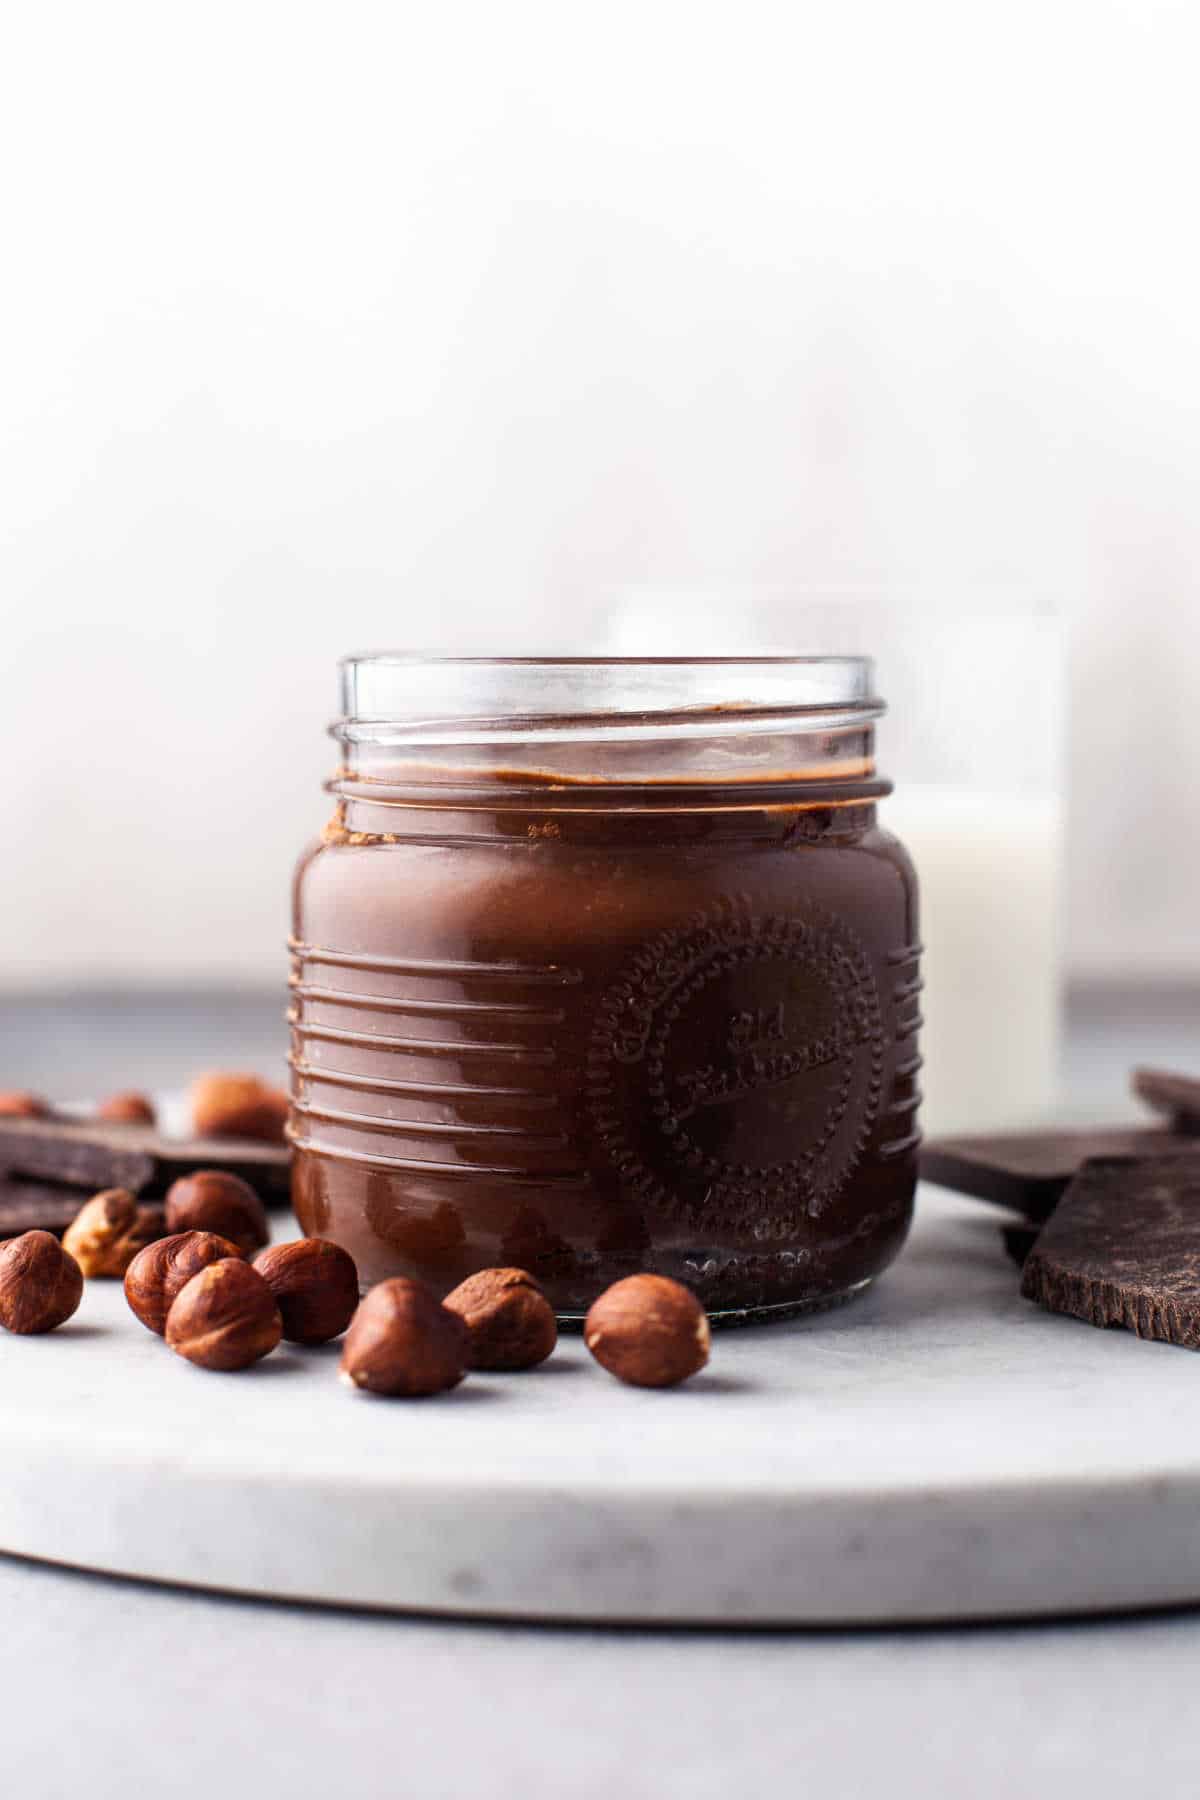 Nutella in a glass jar.